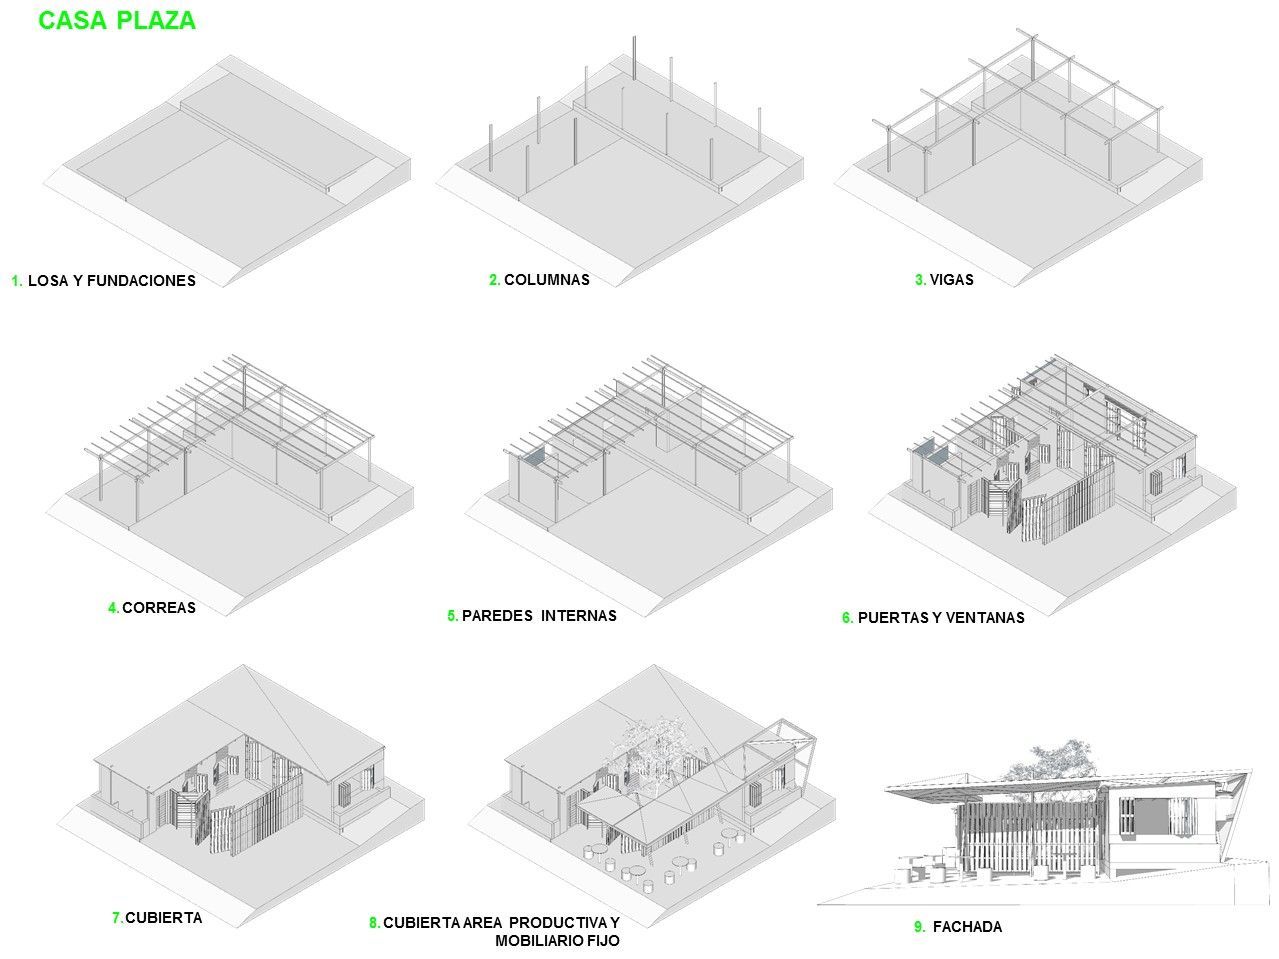 Casa Plaza (Vivienda Barrial Productiva), Taller de Desarrollo Urbano Taller de Desarrollo Urbano Minimalistische huizen